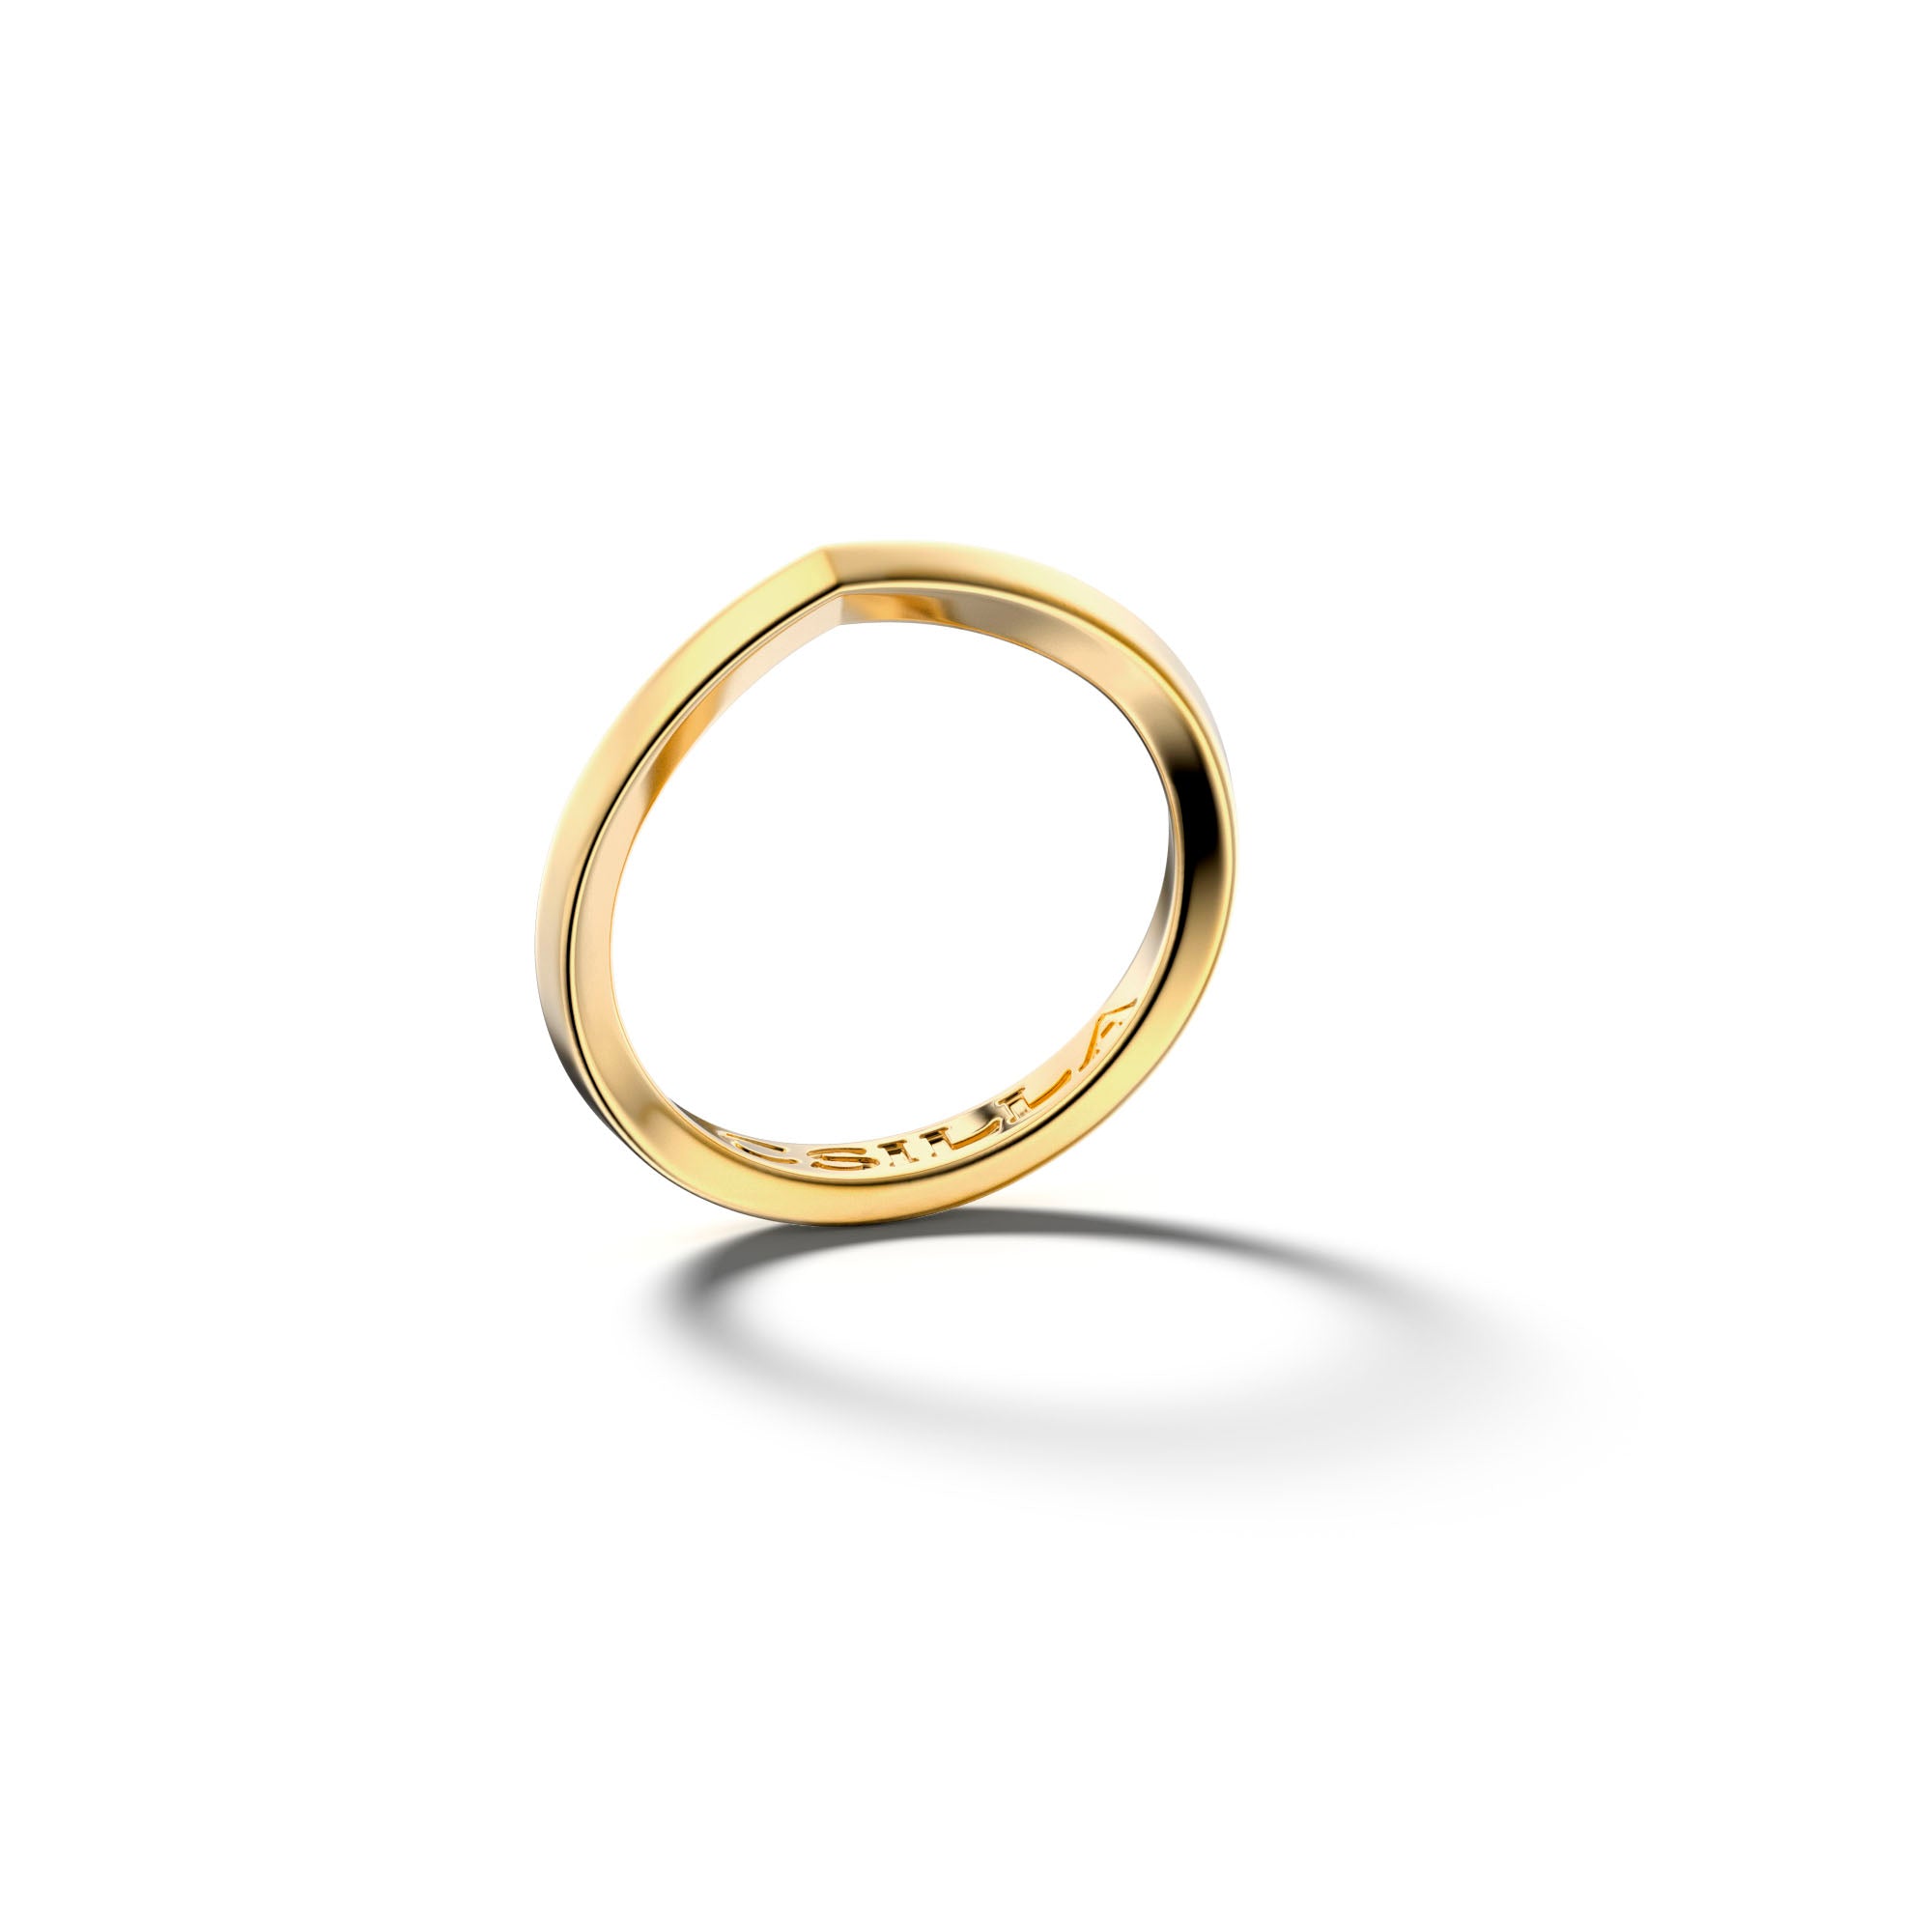 Eden - Thin 18k White Gold Ring - Csilla Jewelry